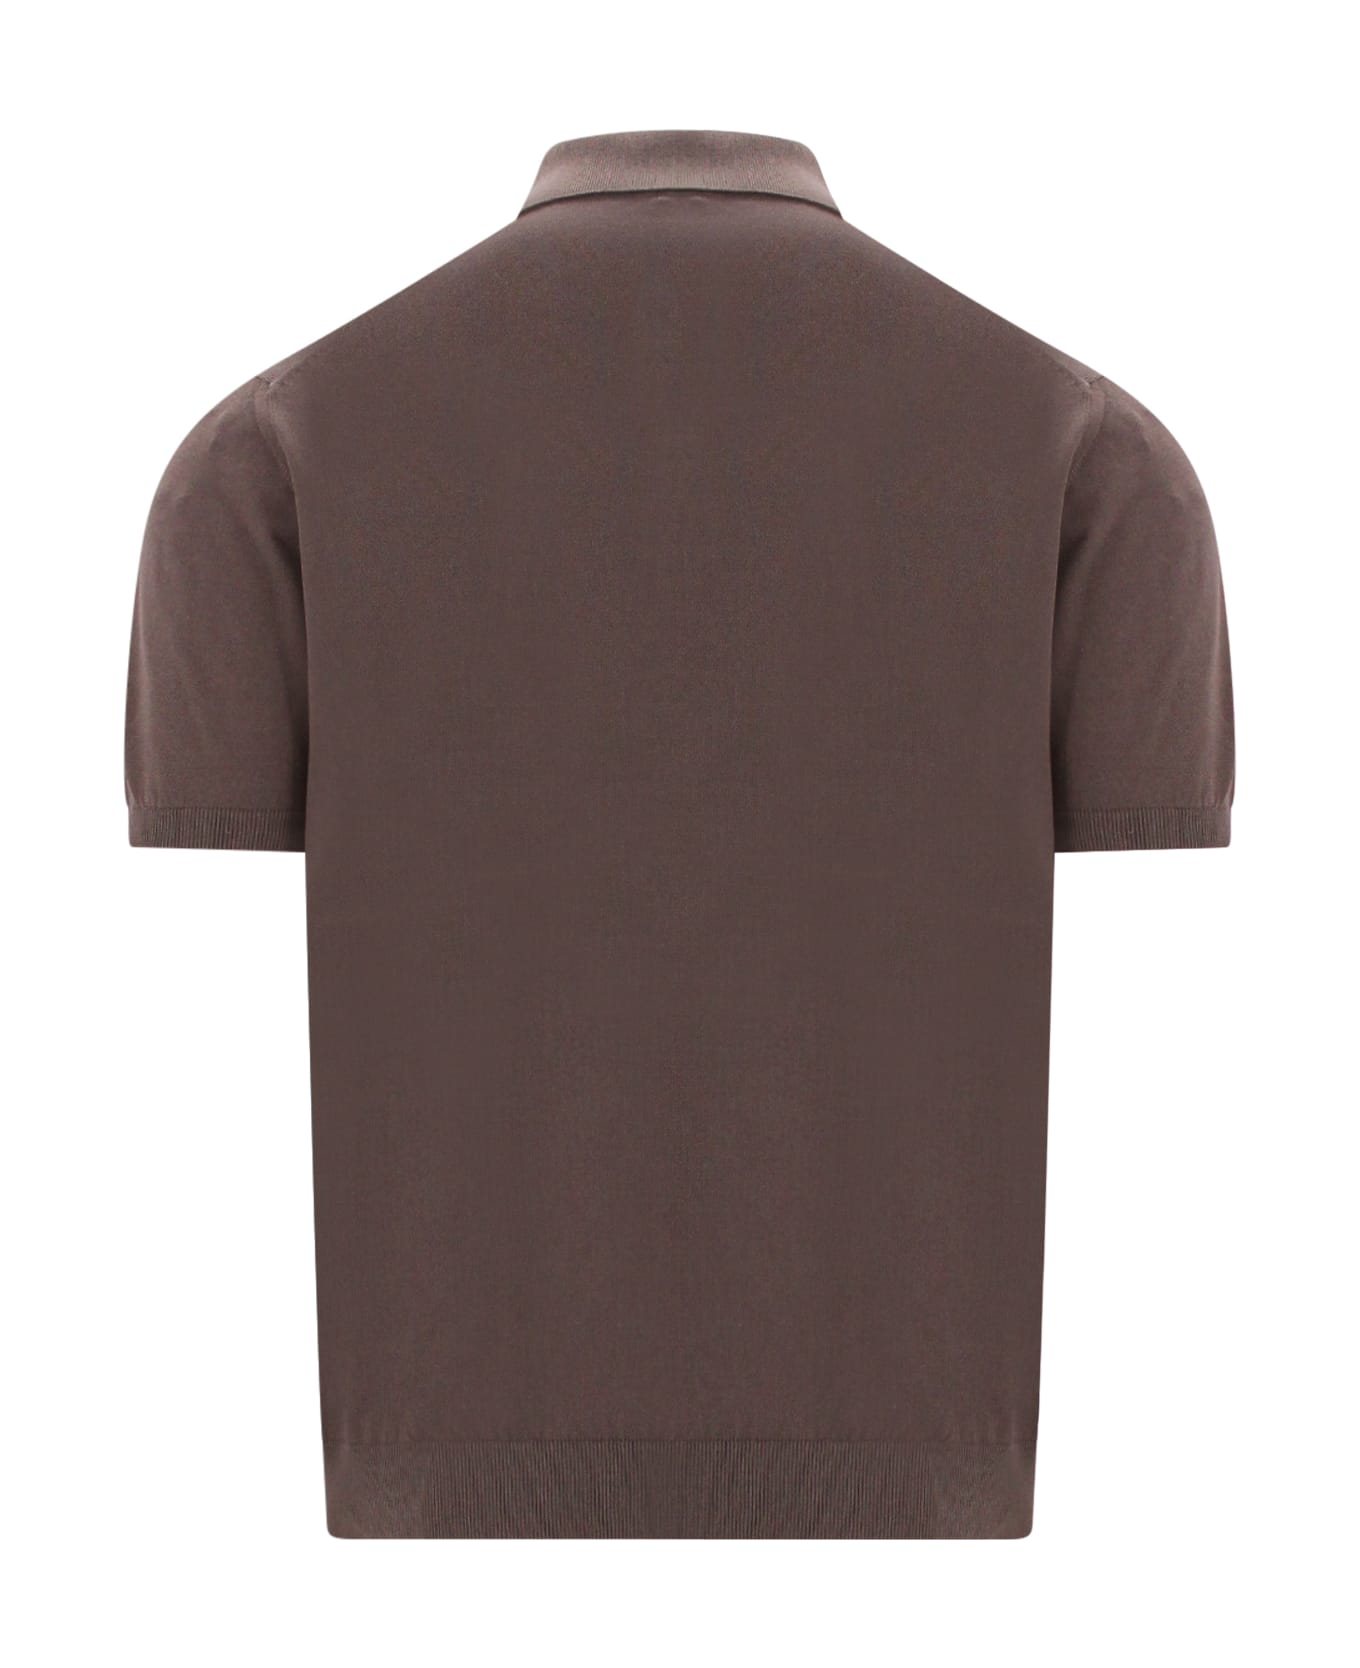 Malo Polo Shirt - Brown